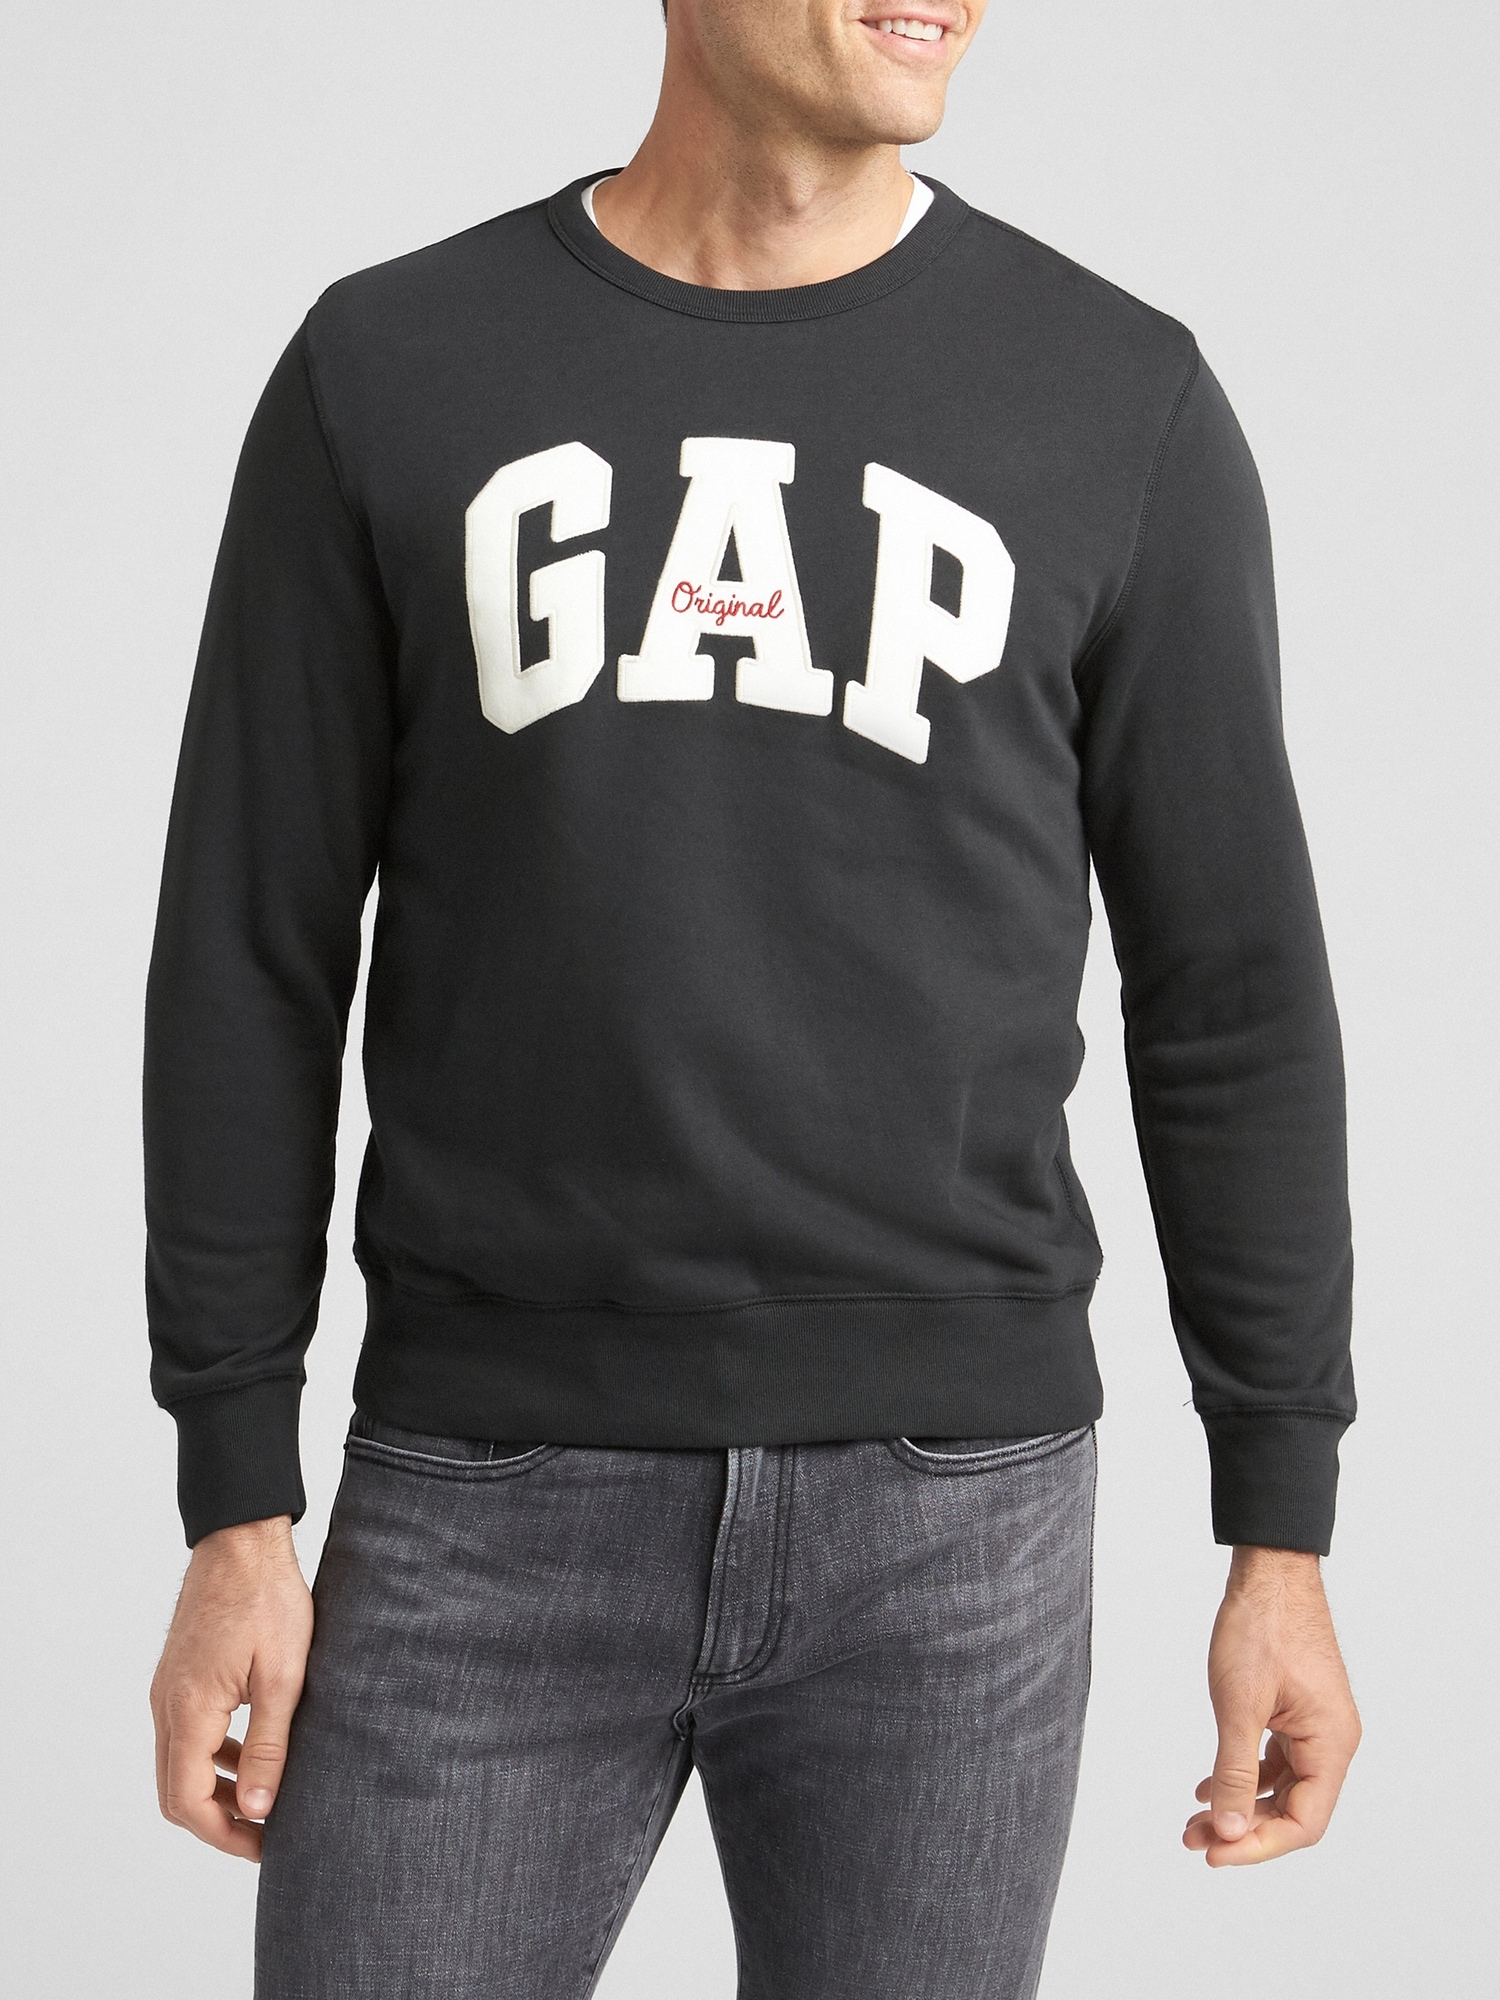 Embroidered Gap Logo Crewneck Pullover | Gap Factory